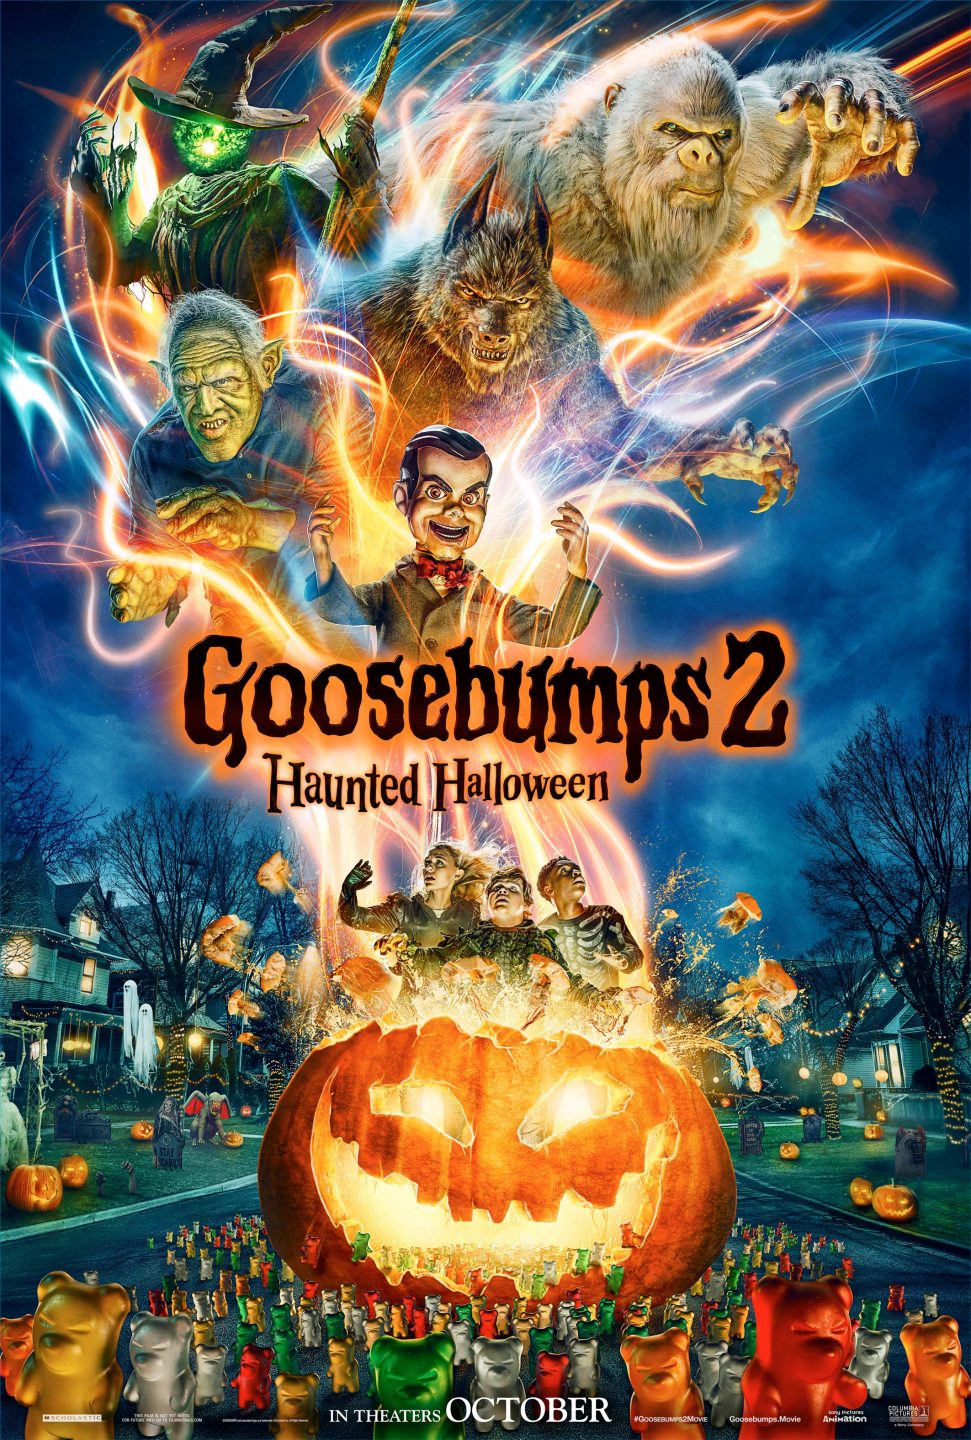 Goosebumps 2: Haunted Halloween poster (Sony Pictures)